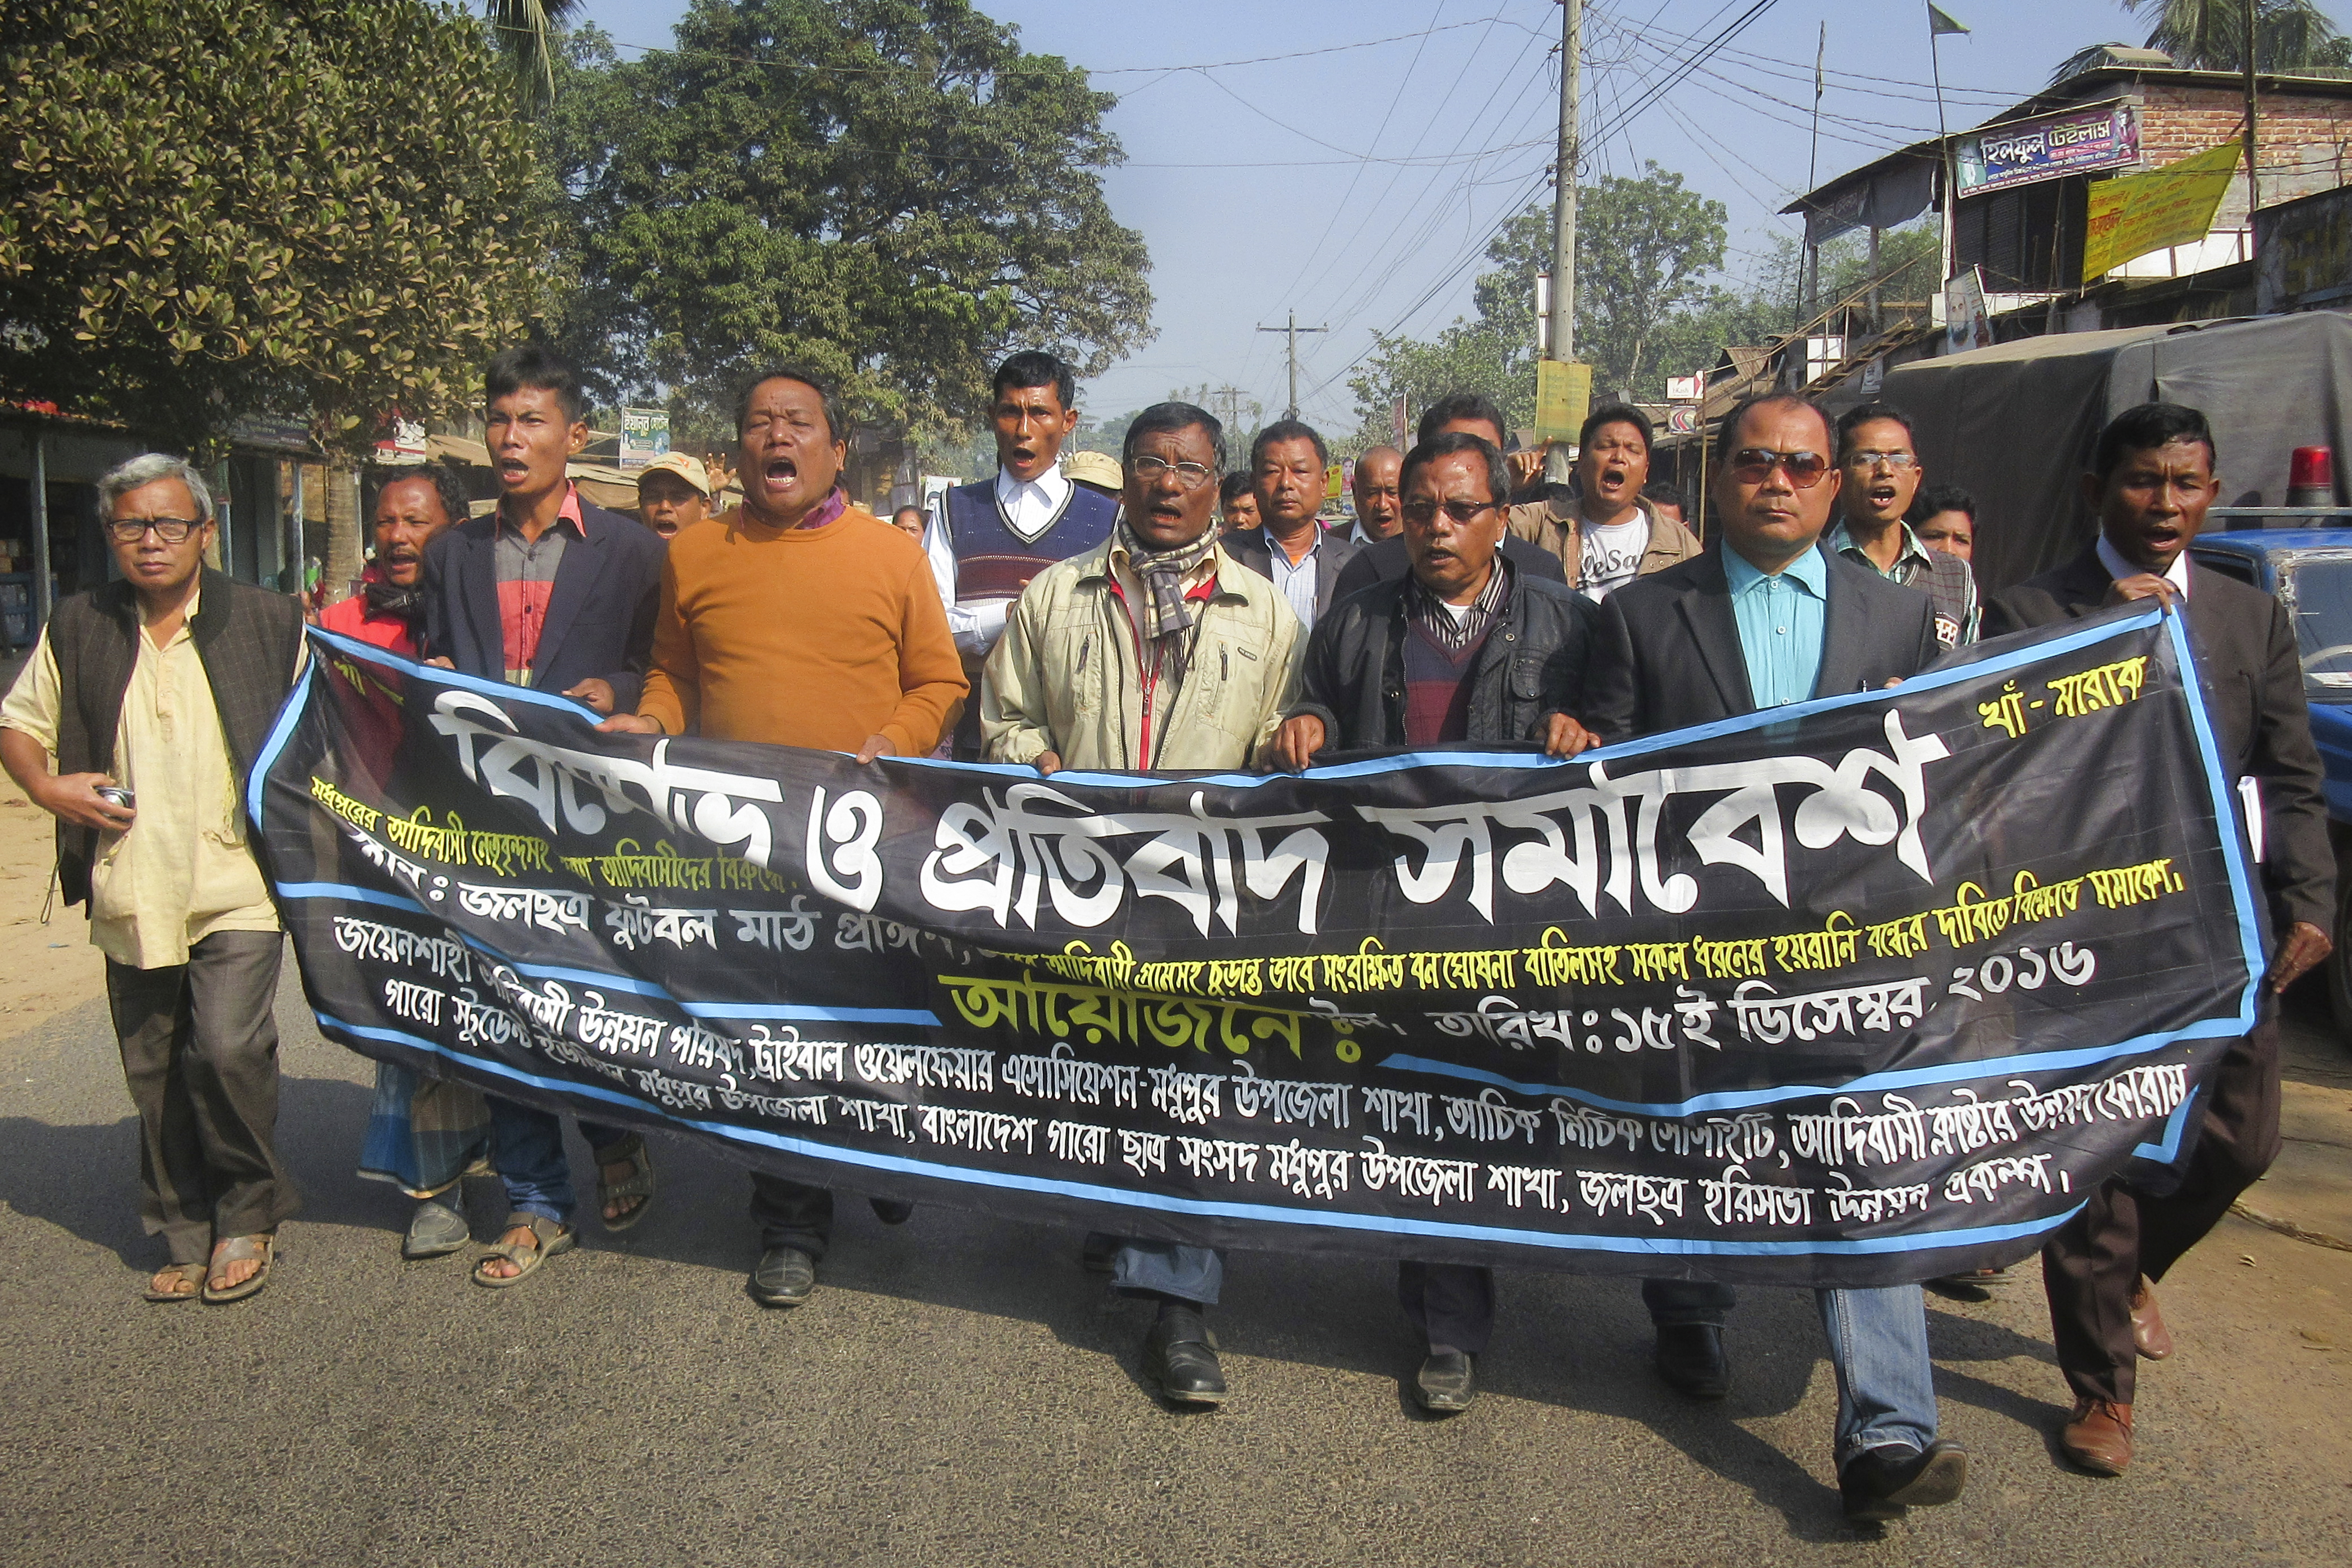 Manifestation de Garos contre la transformation de la forêt de Madhapur en réserve naturelle. Bangladesh, 2016. © Mithun Jambil/Caritas Bangladesh